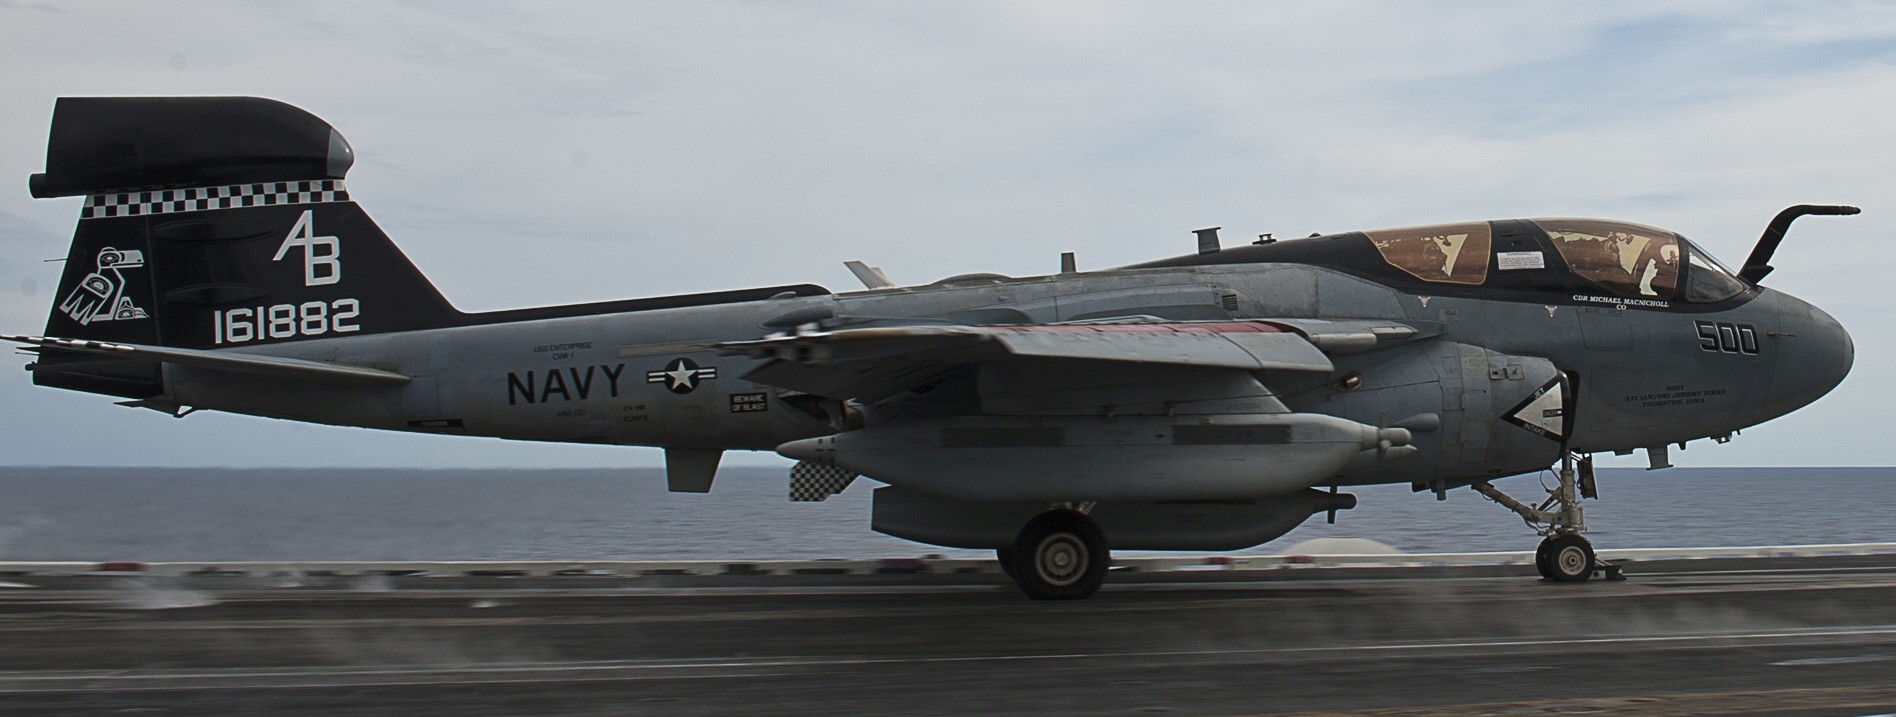 vaq-137 rooks electronic attack squadron us navy ea-6b prowler carrier air wing cvw-1 uss enterprise cvn-65 36